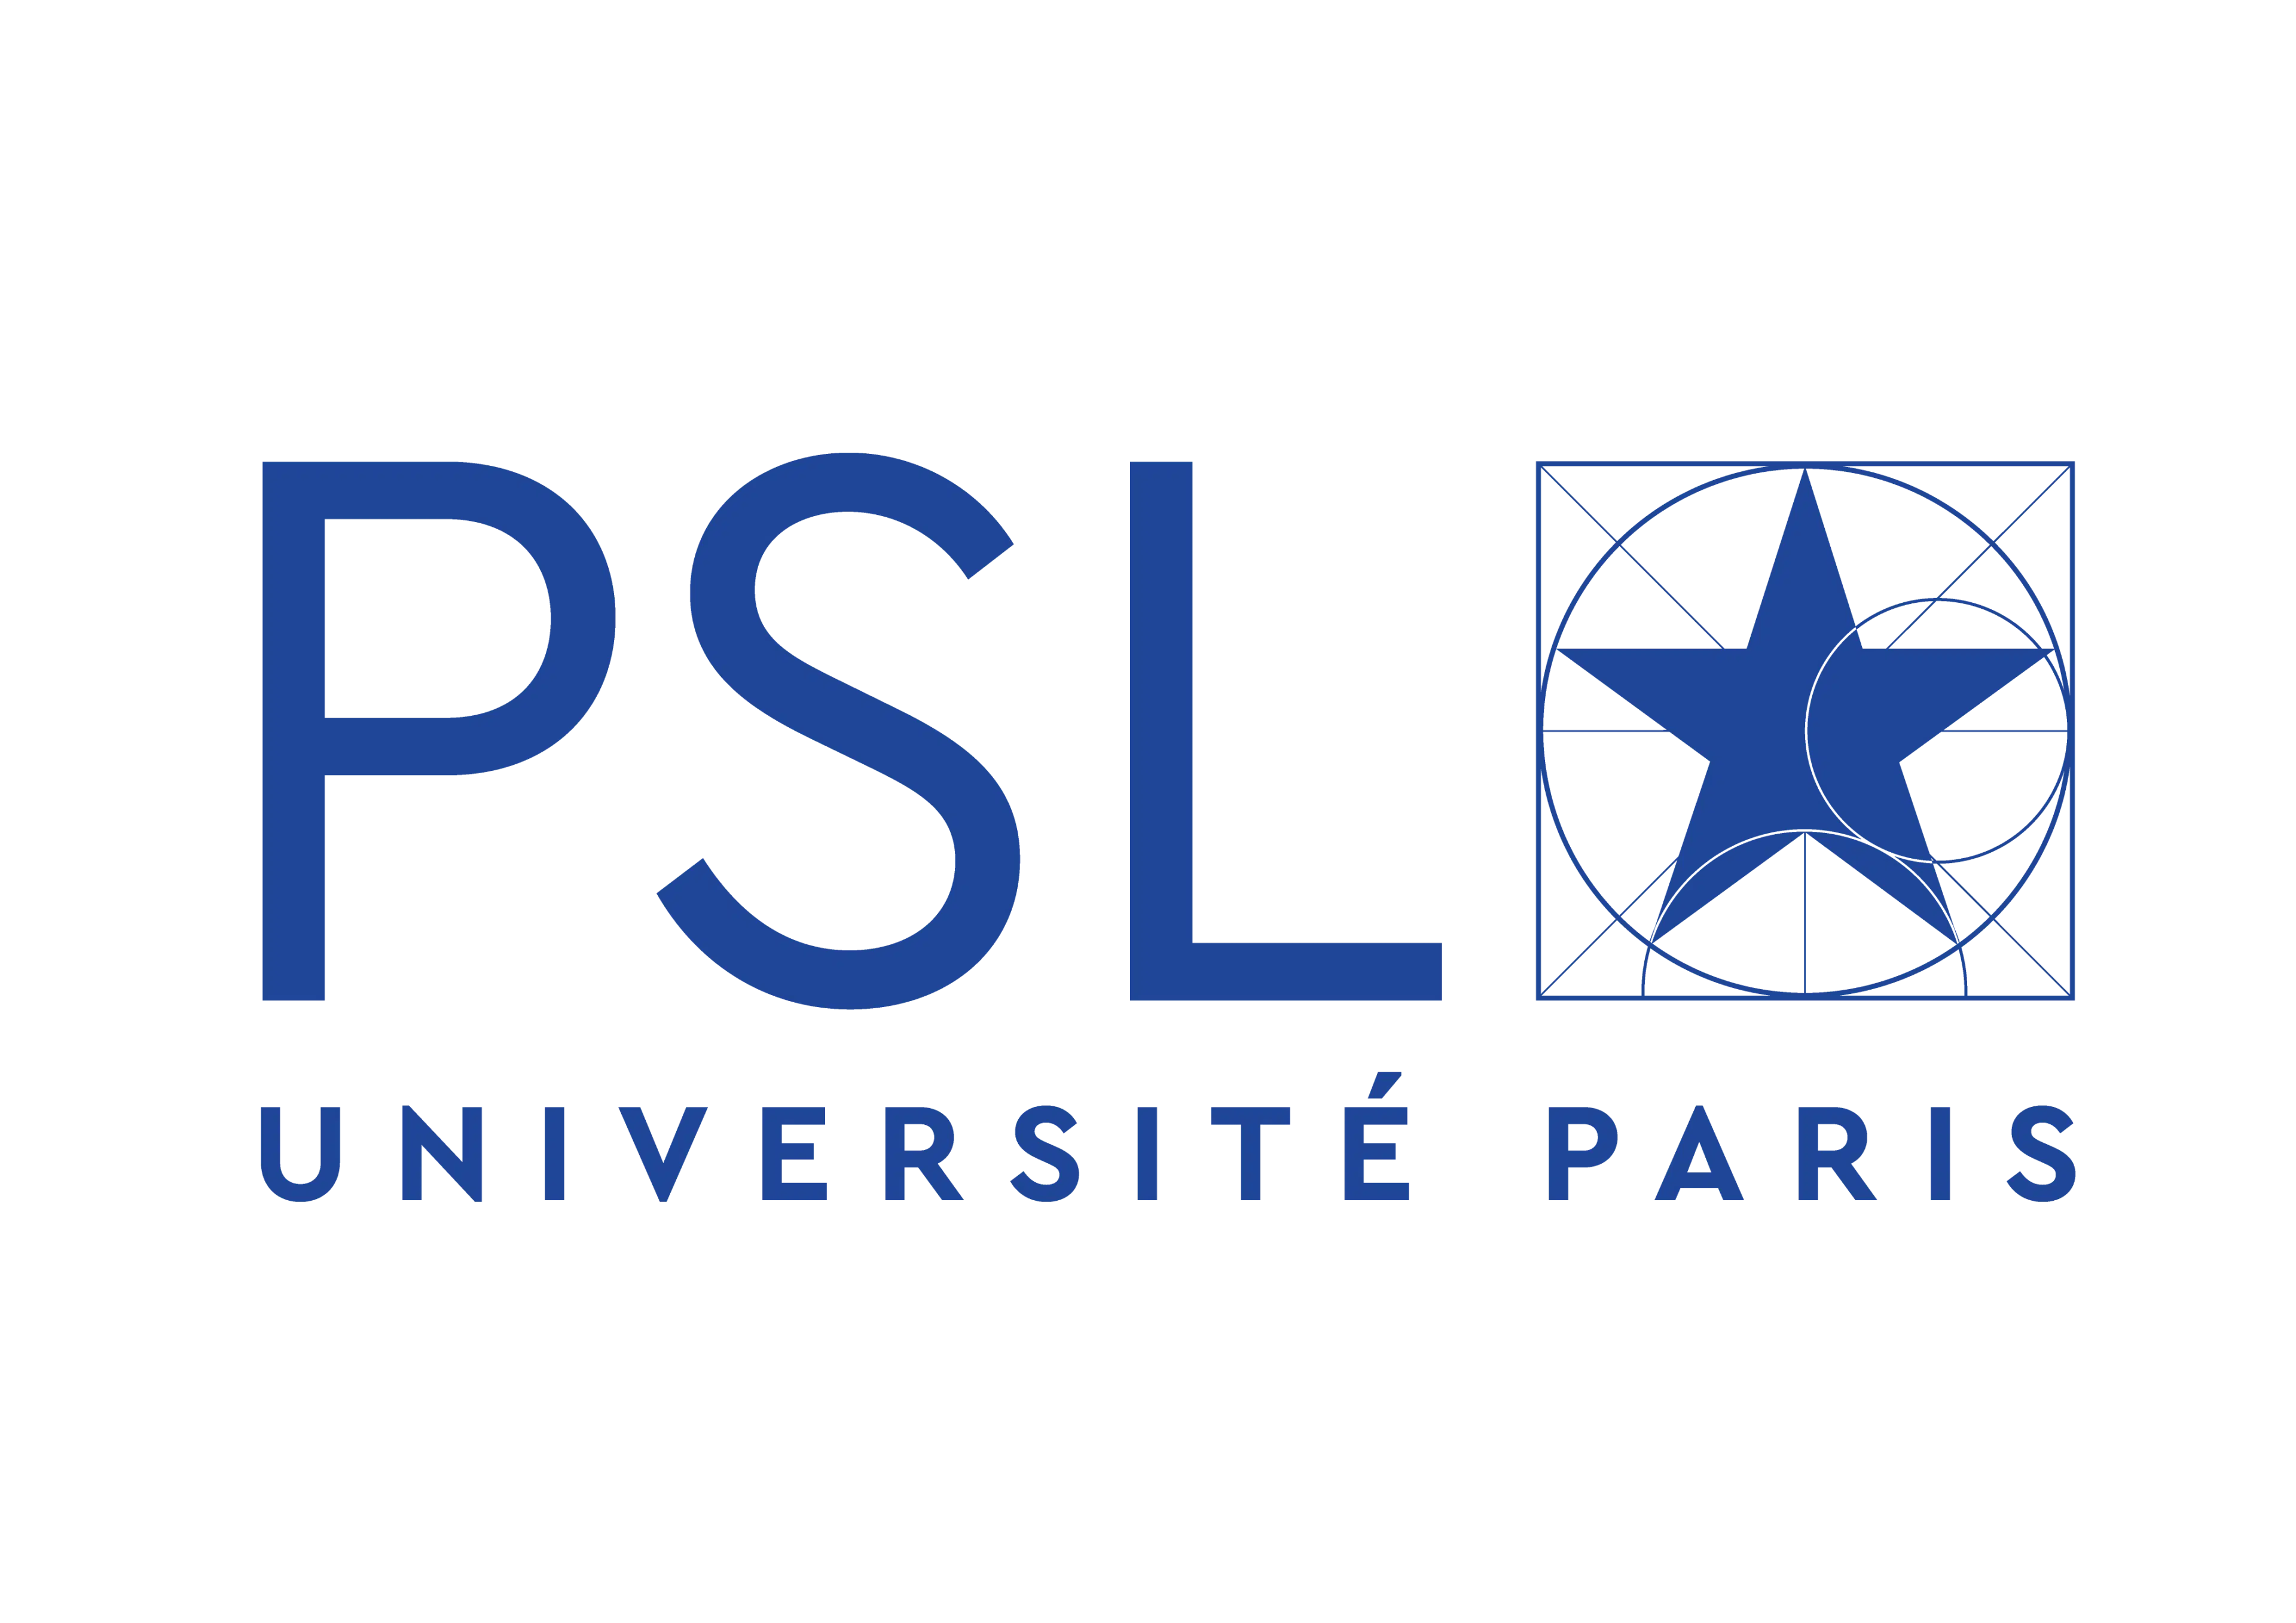 PSL University Paris logo